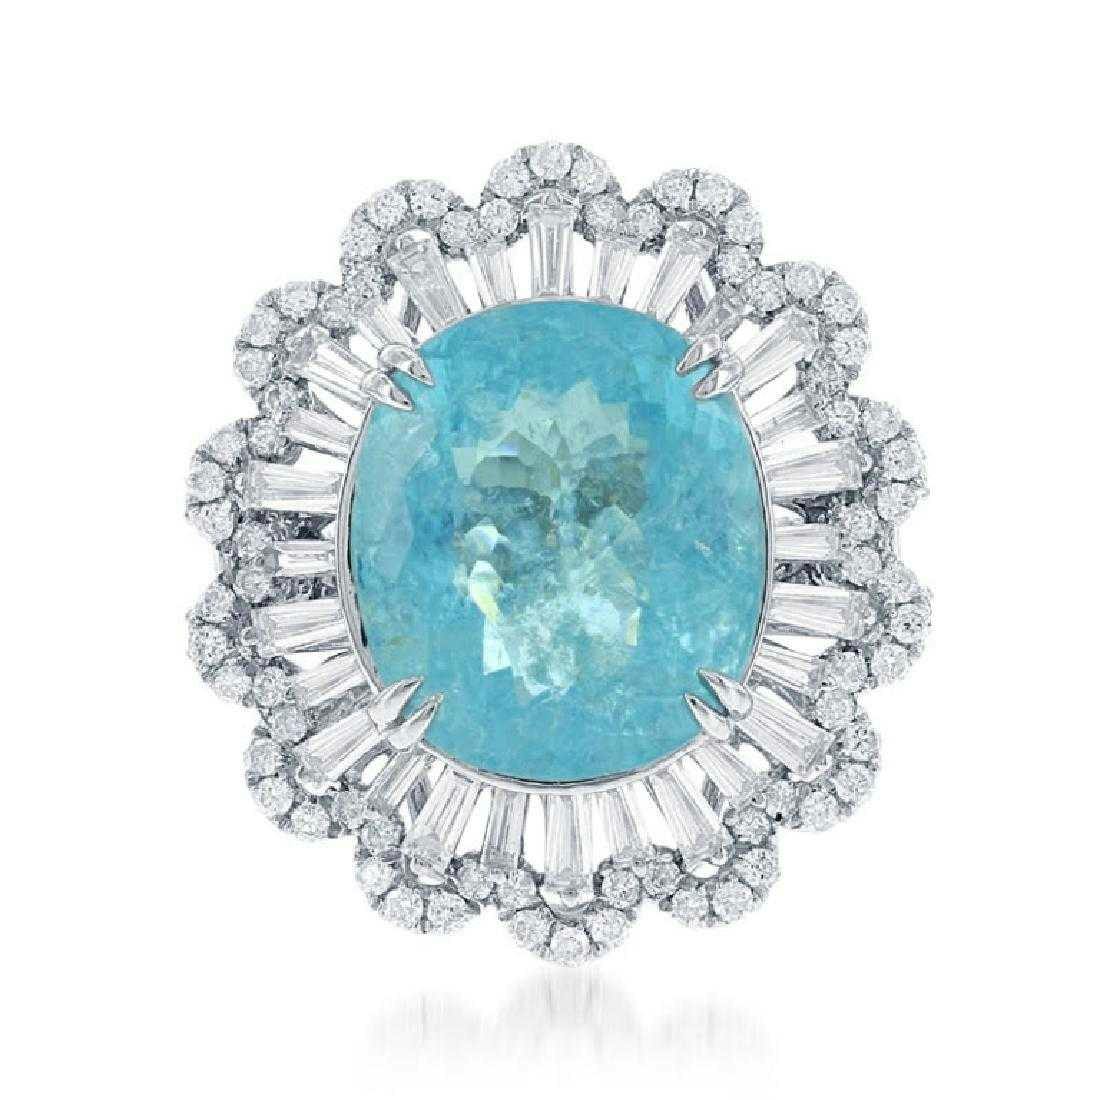 paraiba tourmaline and diamond ring - rare and expensive engagement ring stones